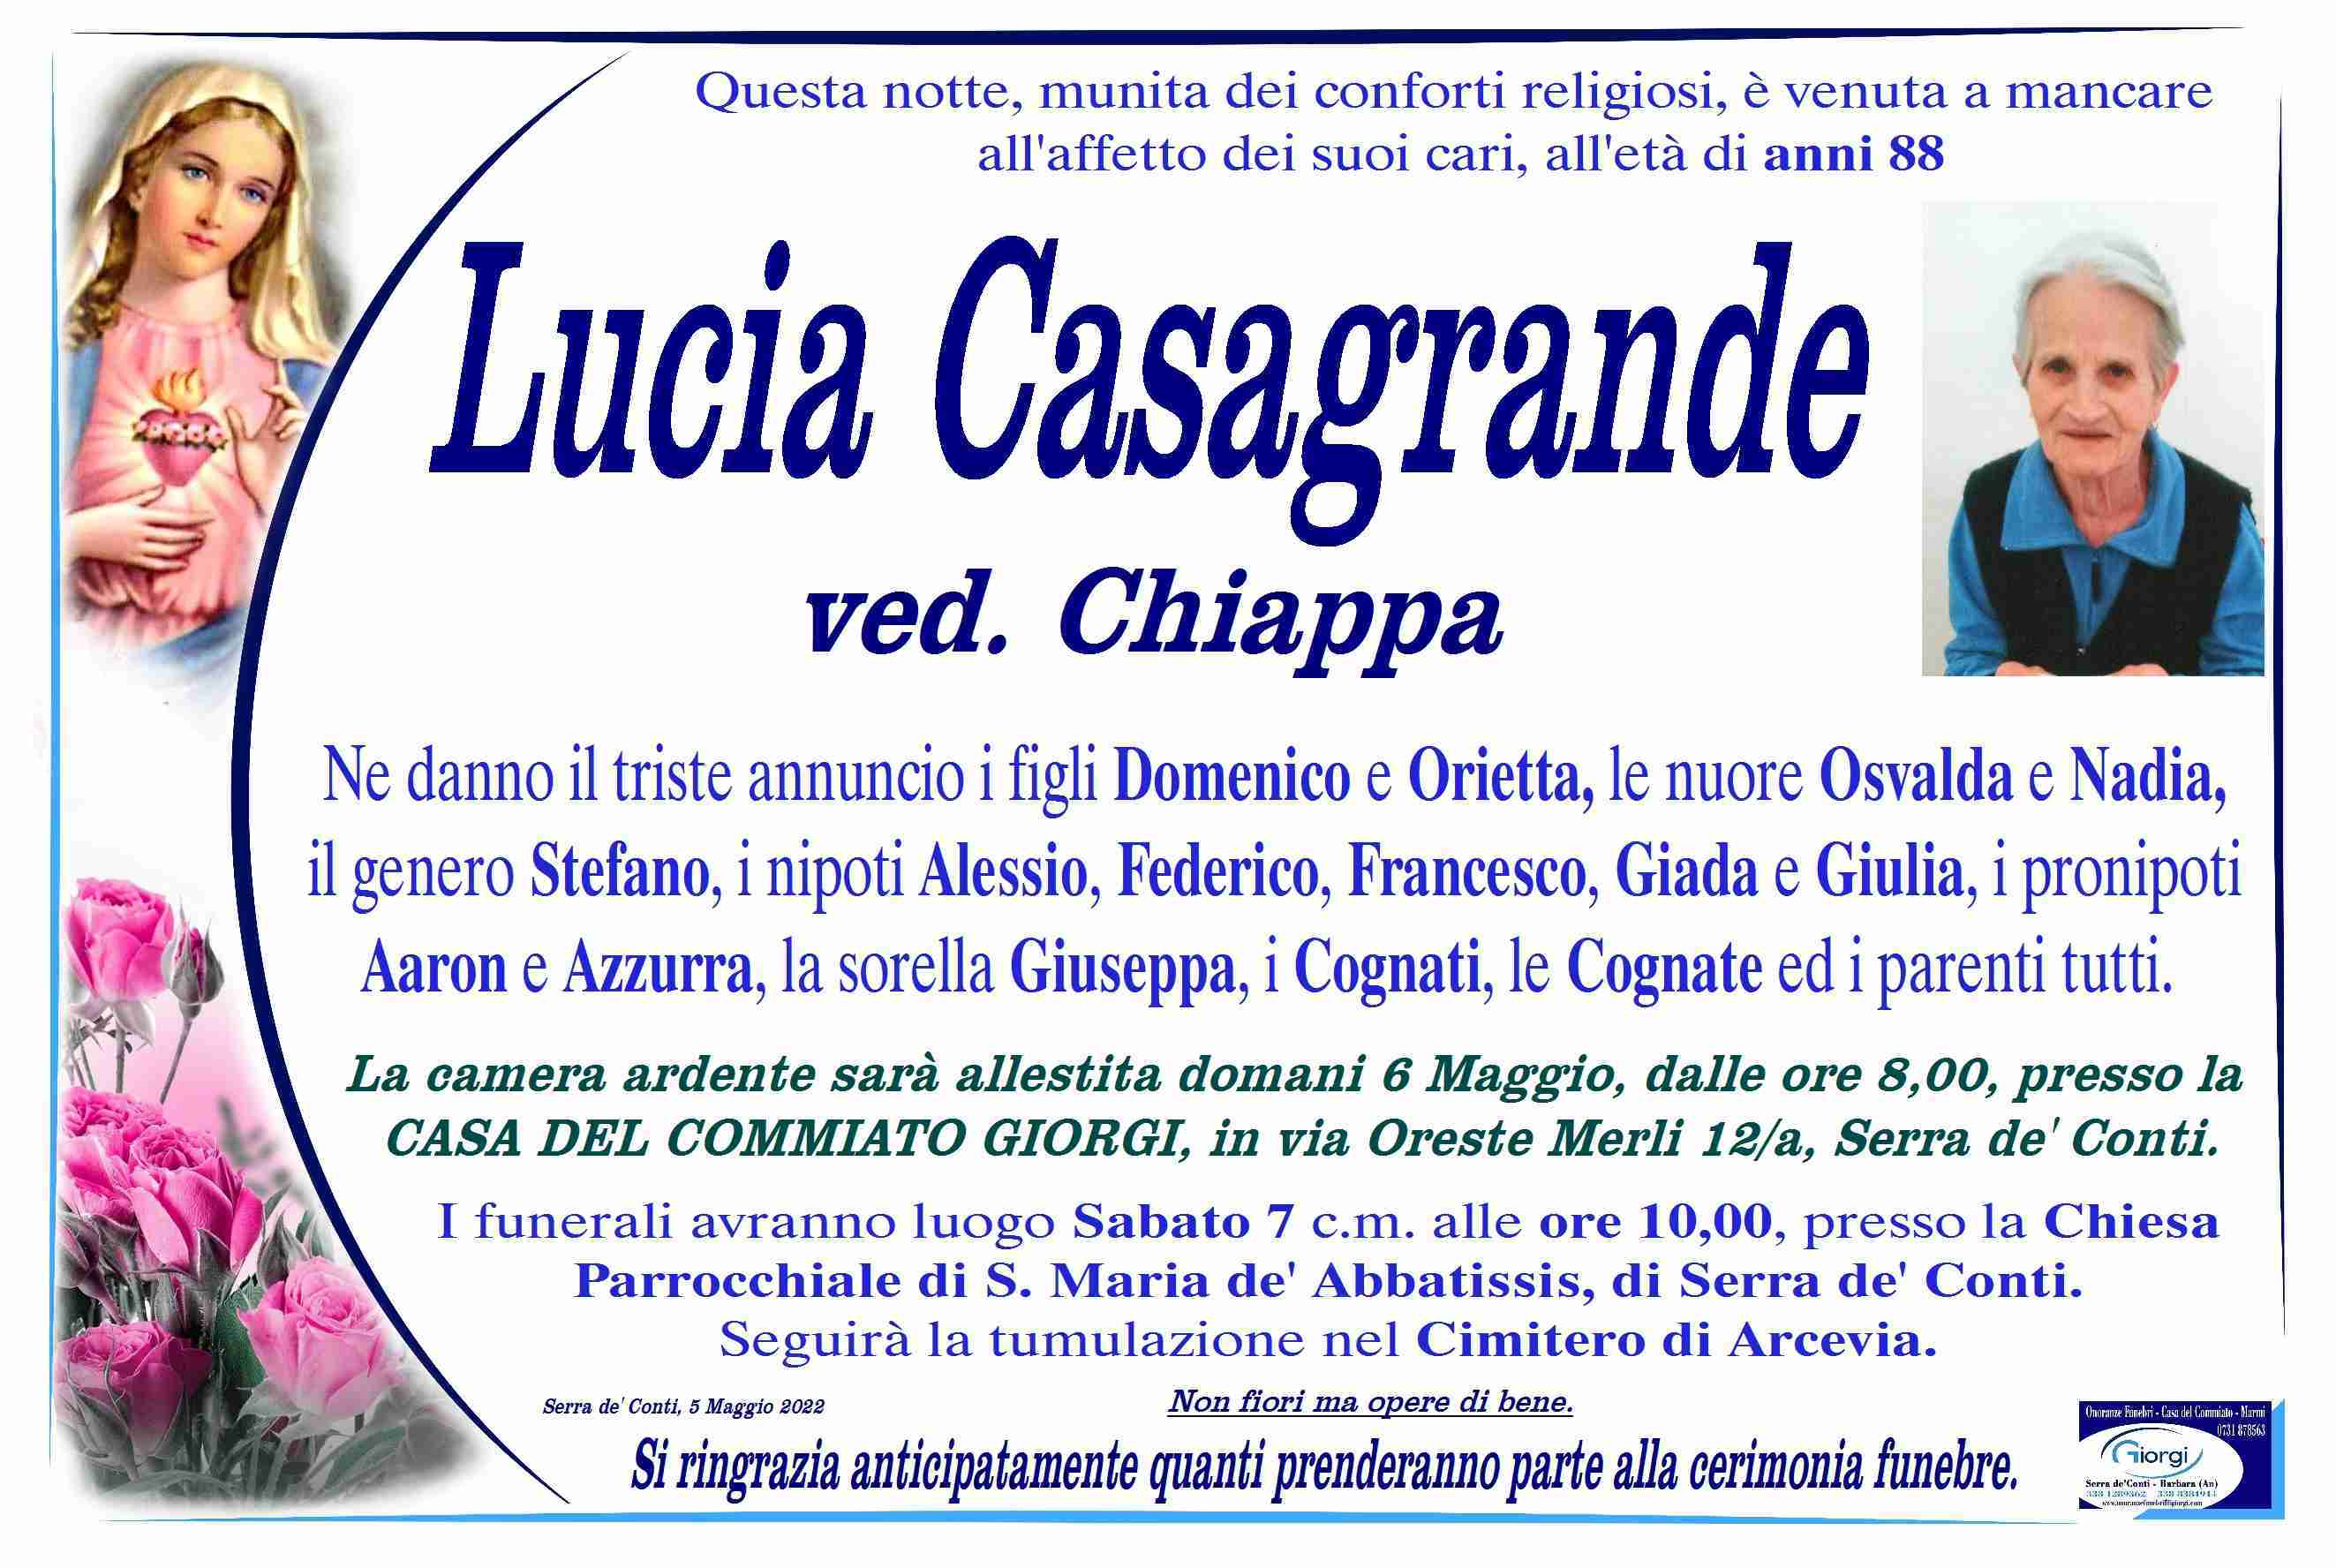 Lucia Casagrande